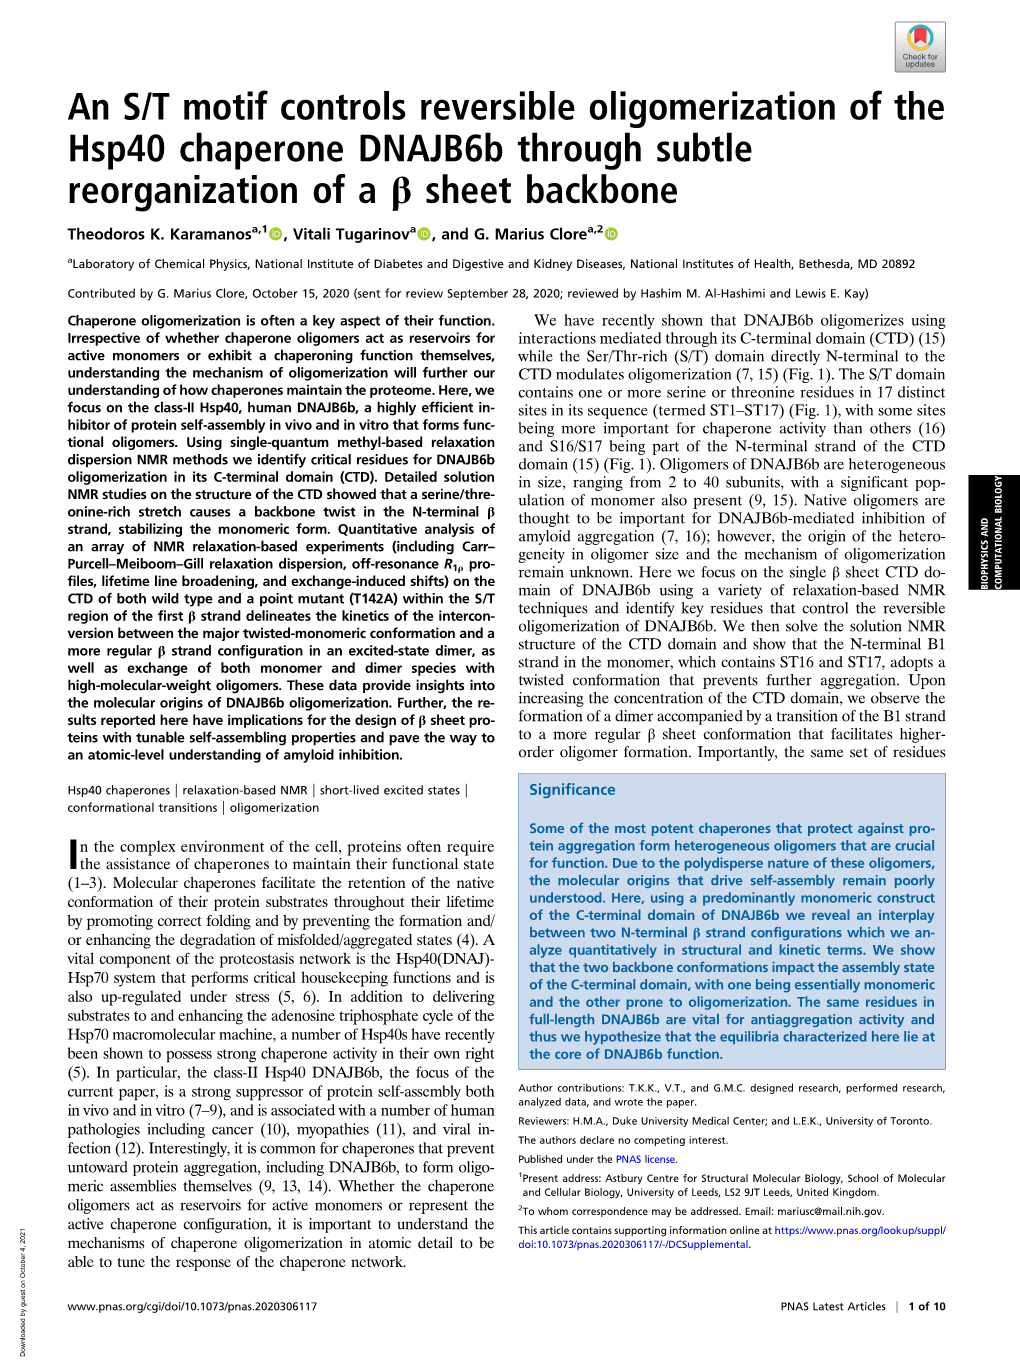 An S/T Motif Controls Reversible Oligomerization of the Hsp40 Chaperone Dnajb6b Through Subtle Reorganization of a Β Sheet Backbone